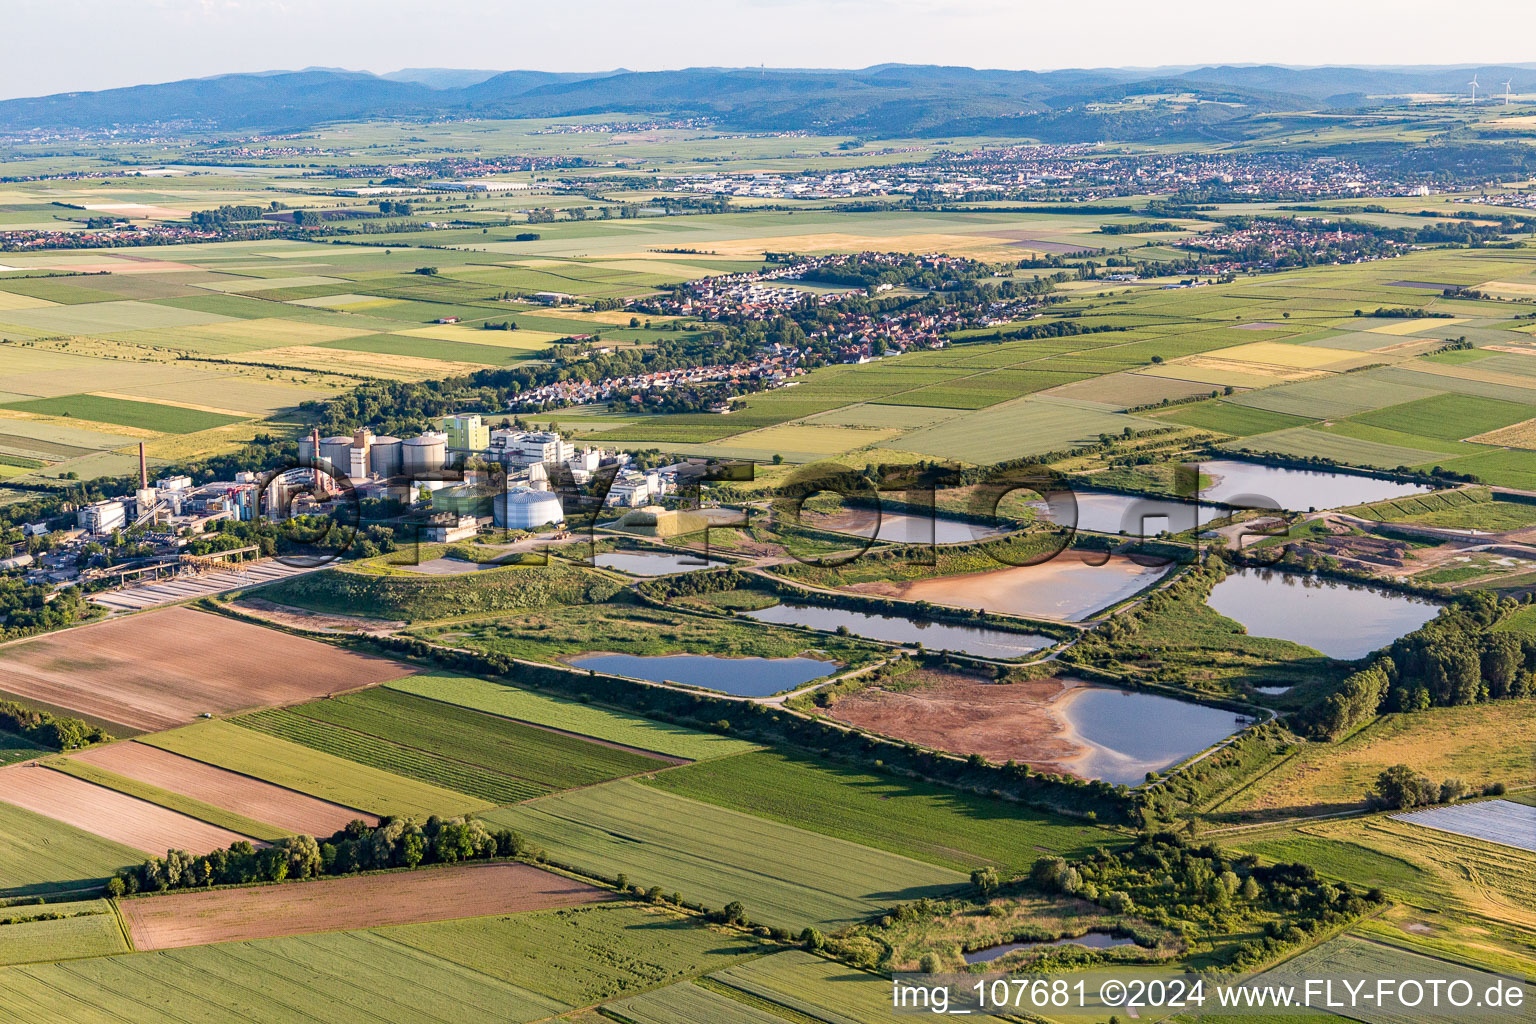 Sewage works Basin for waste water treatment of sugar factory Suedzucker AG in Obrigheim (Pfalz) in the state Rhineland-Palatinate, Germany